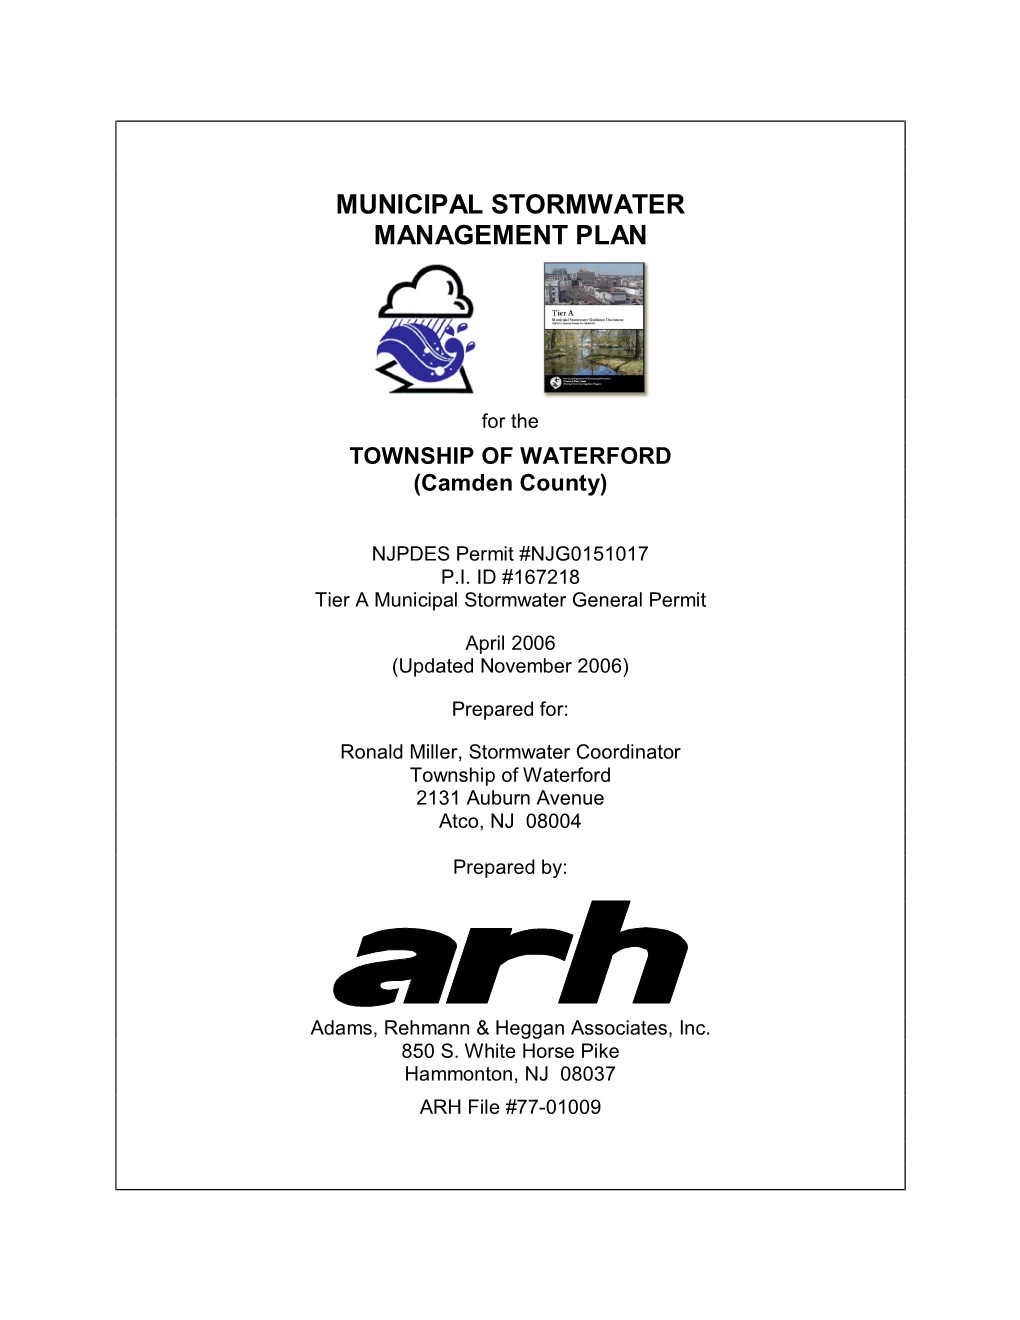 Municipal Stormwater Management Plan